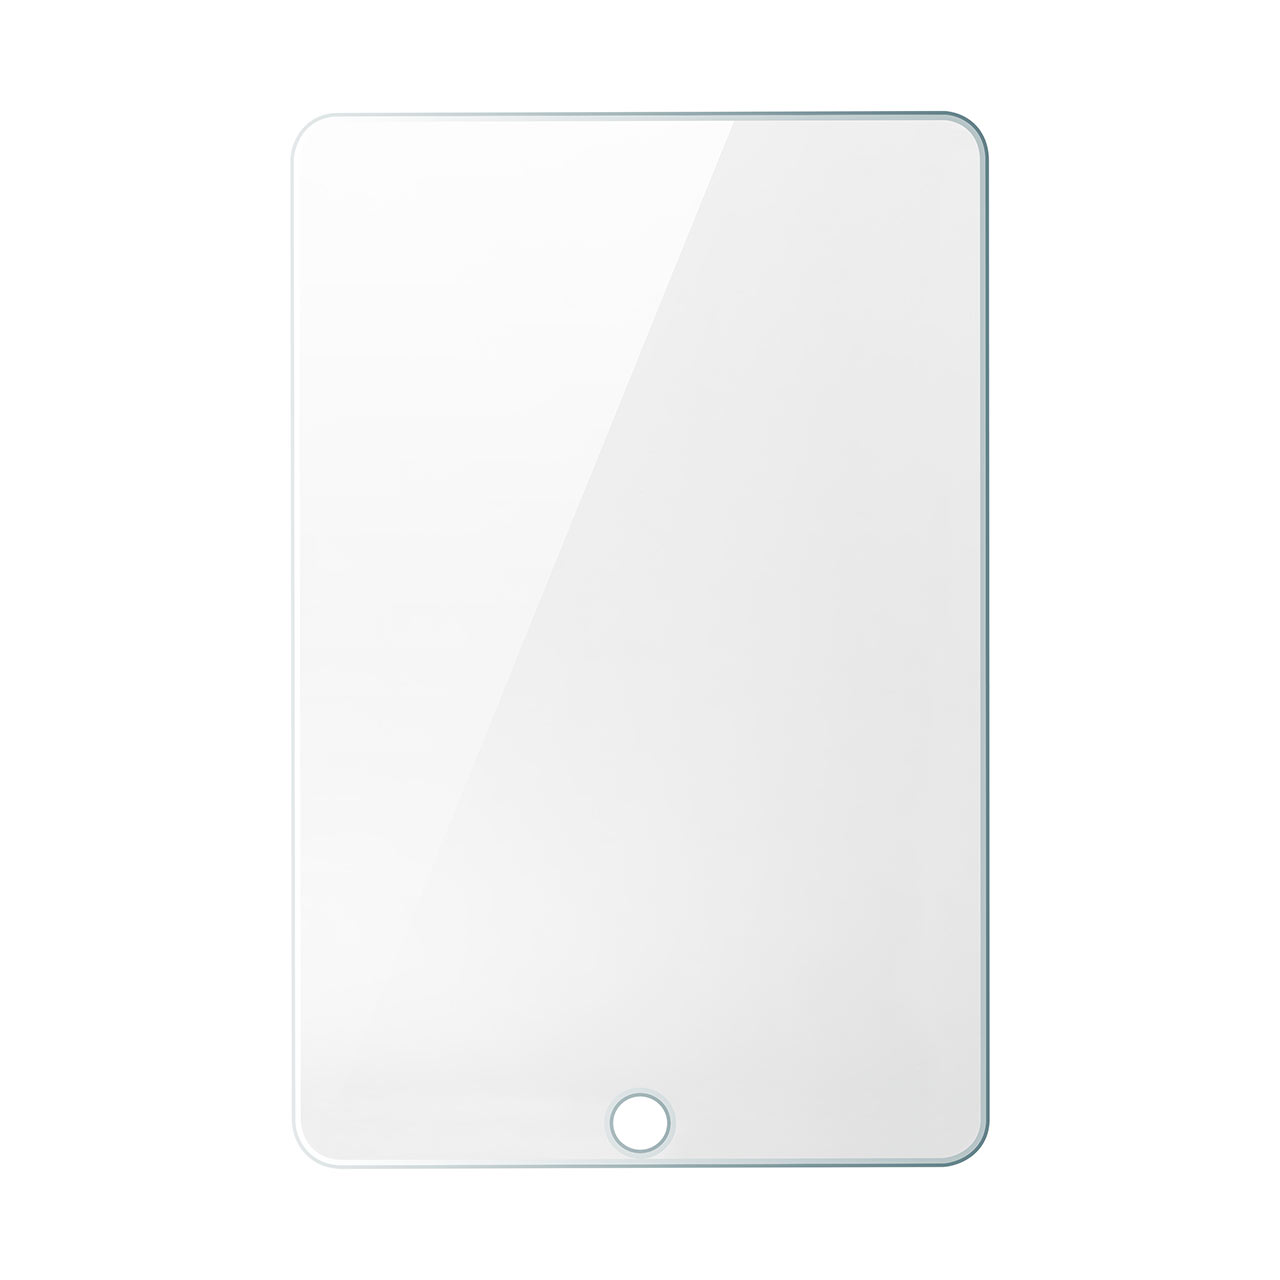 iPad mini 2019KXیtBiKXtBEیtBEdx9HE0.3mmEA^b`gtE7.9C`j 200-LCD056